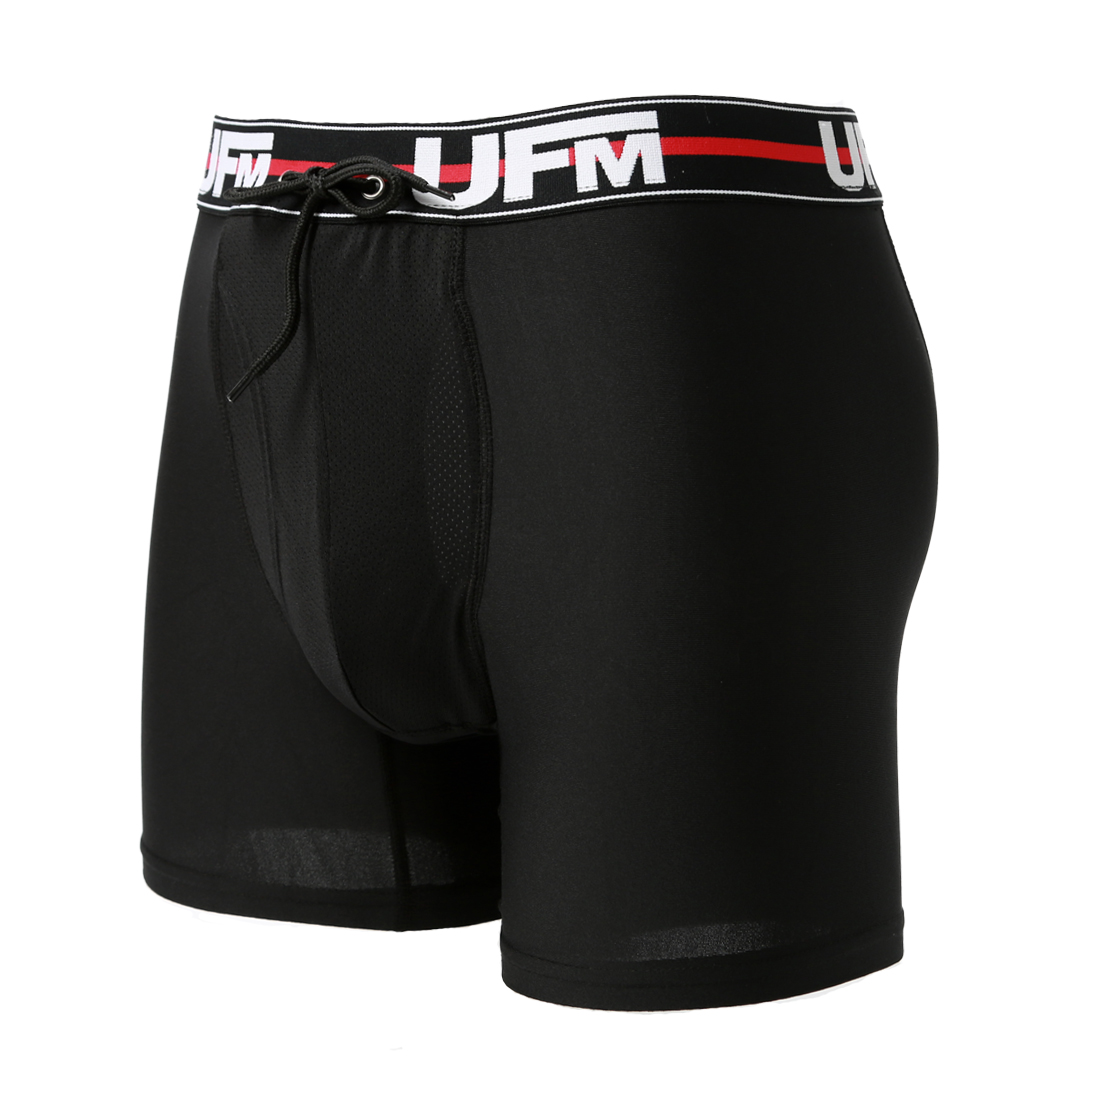 Parent UFM Underwear for Men Big and Tall Polyester 6 inch Original Max Boxer Brief Black 800